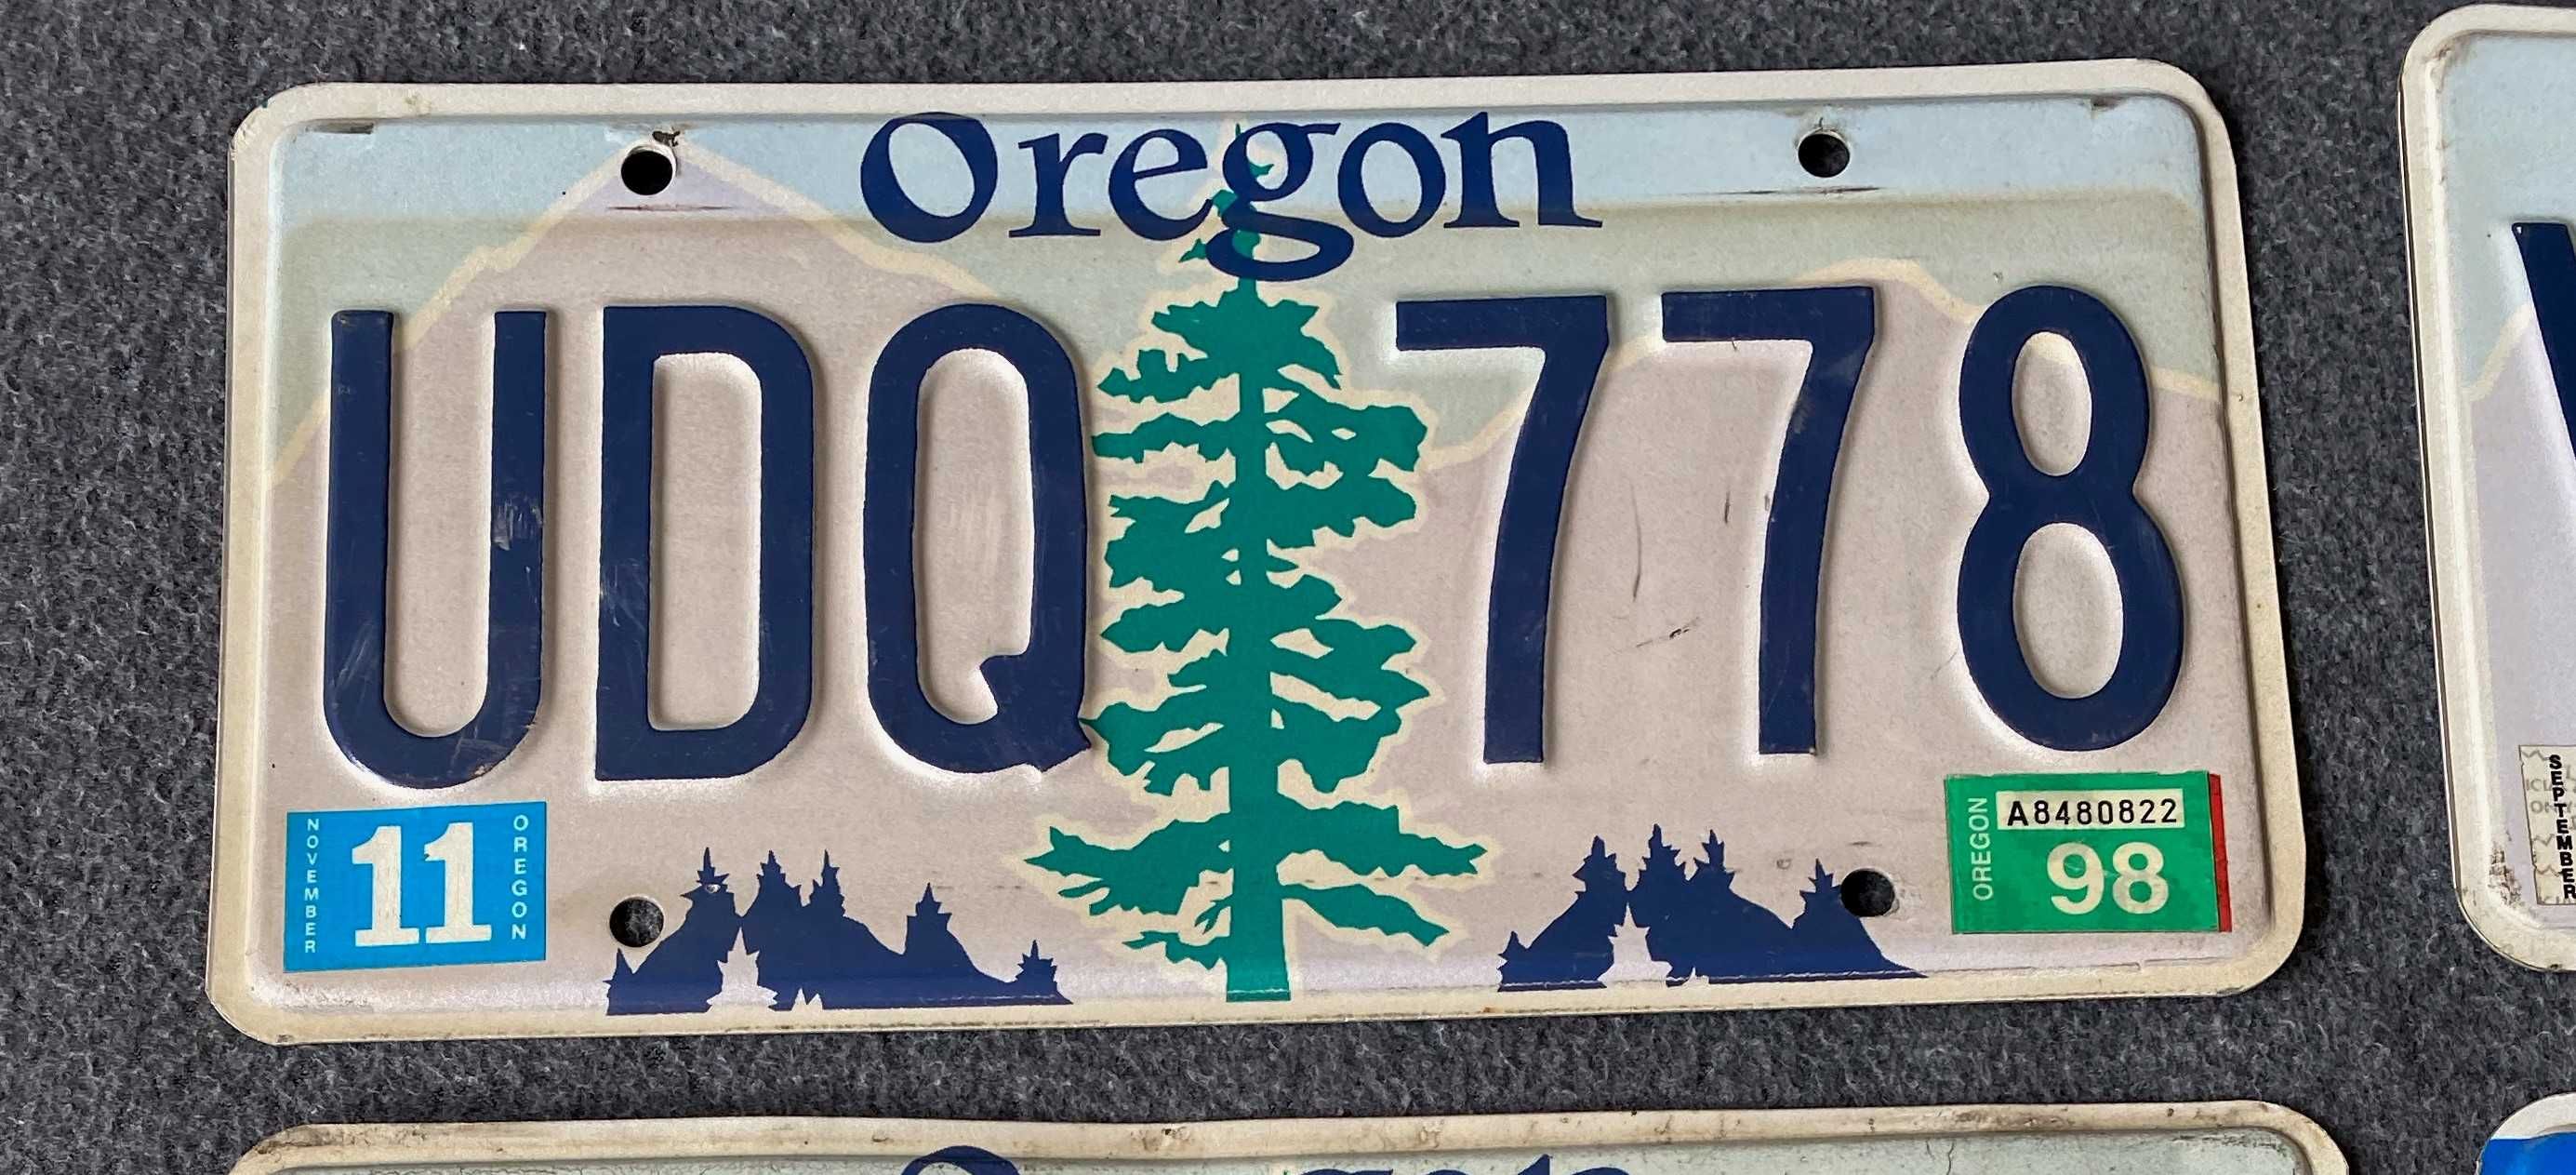 USA tablica rejestracyjna Oregon 778